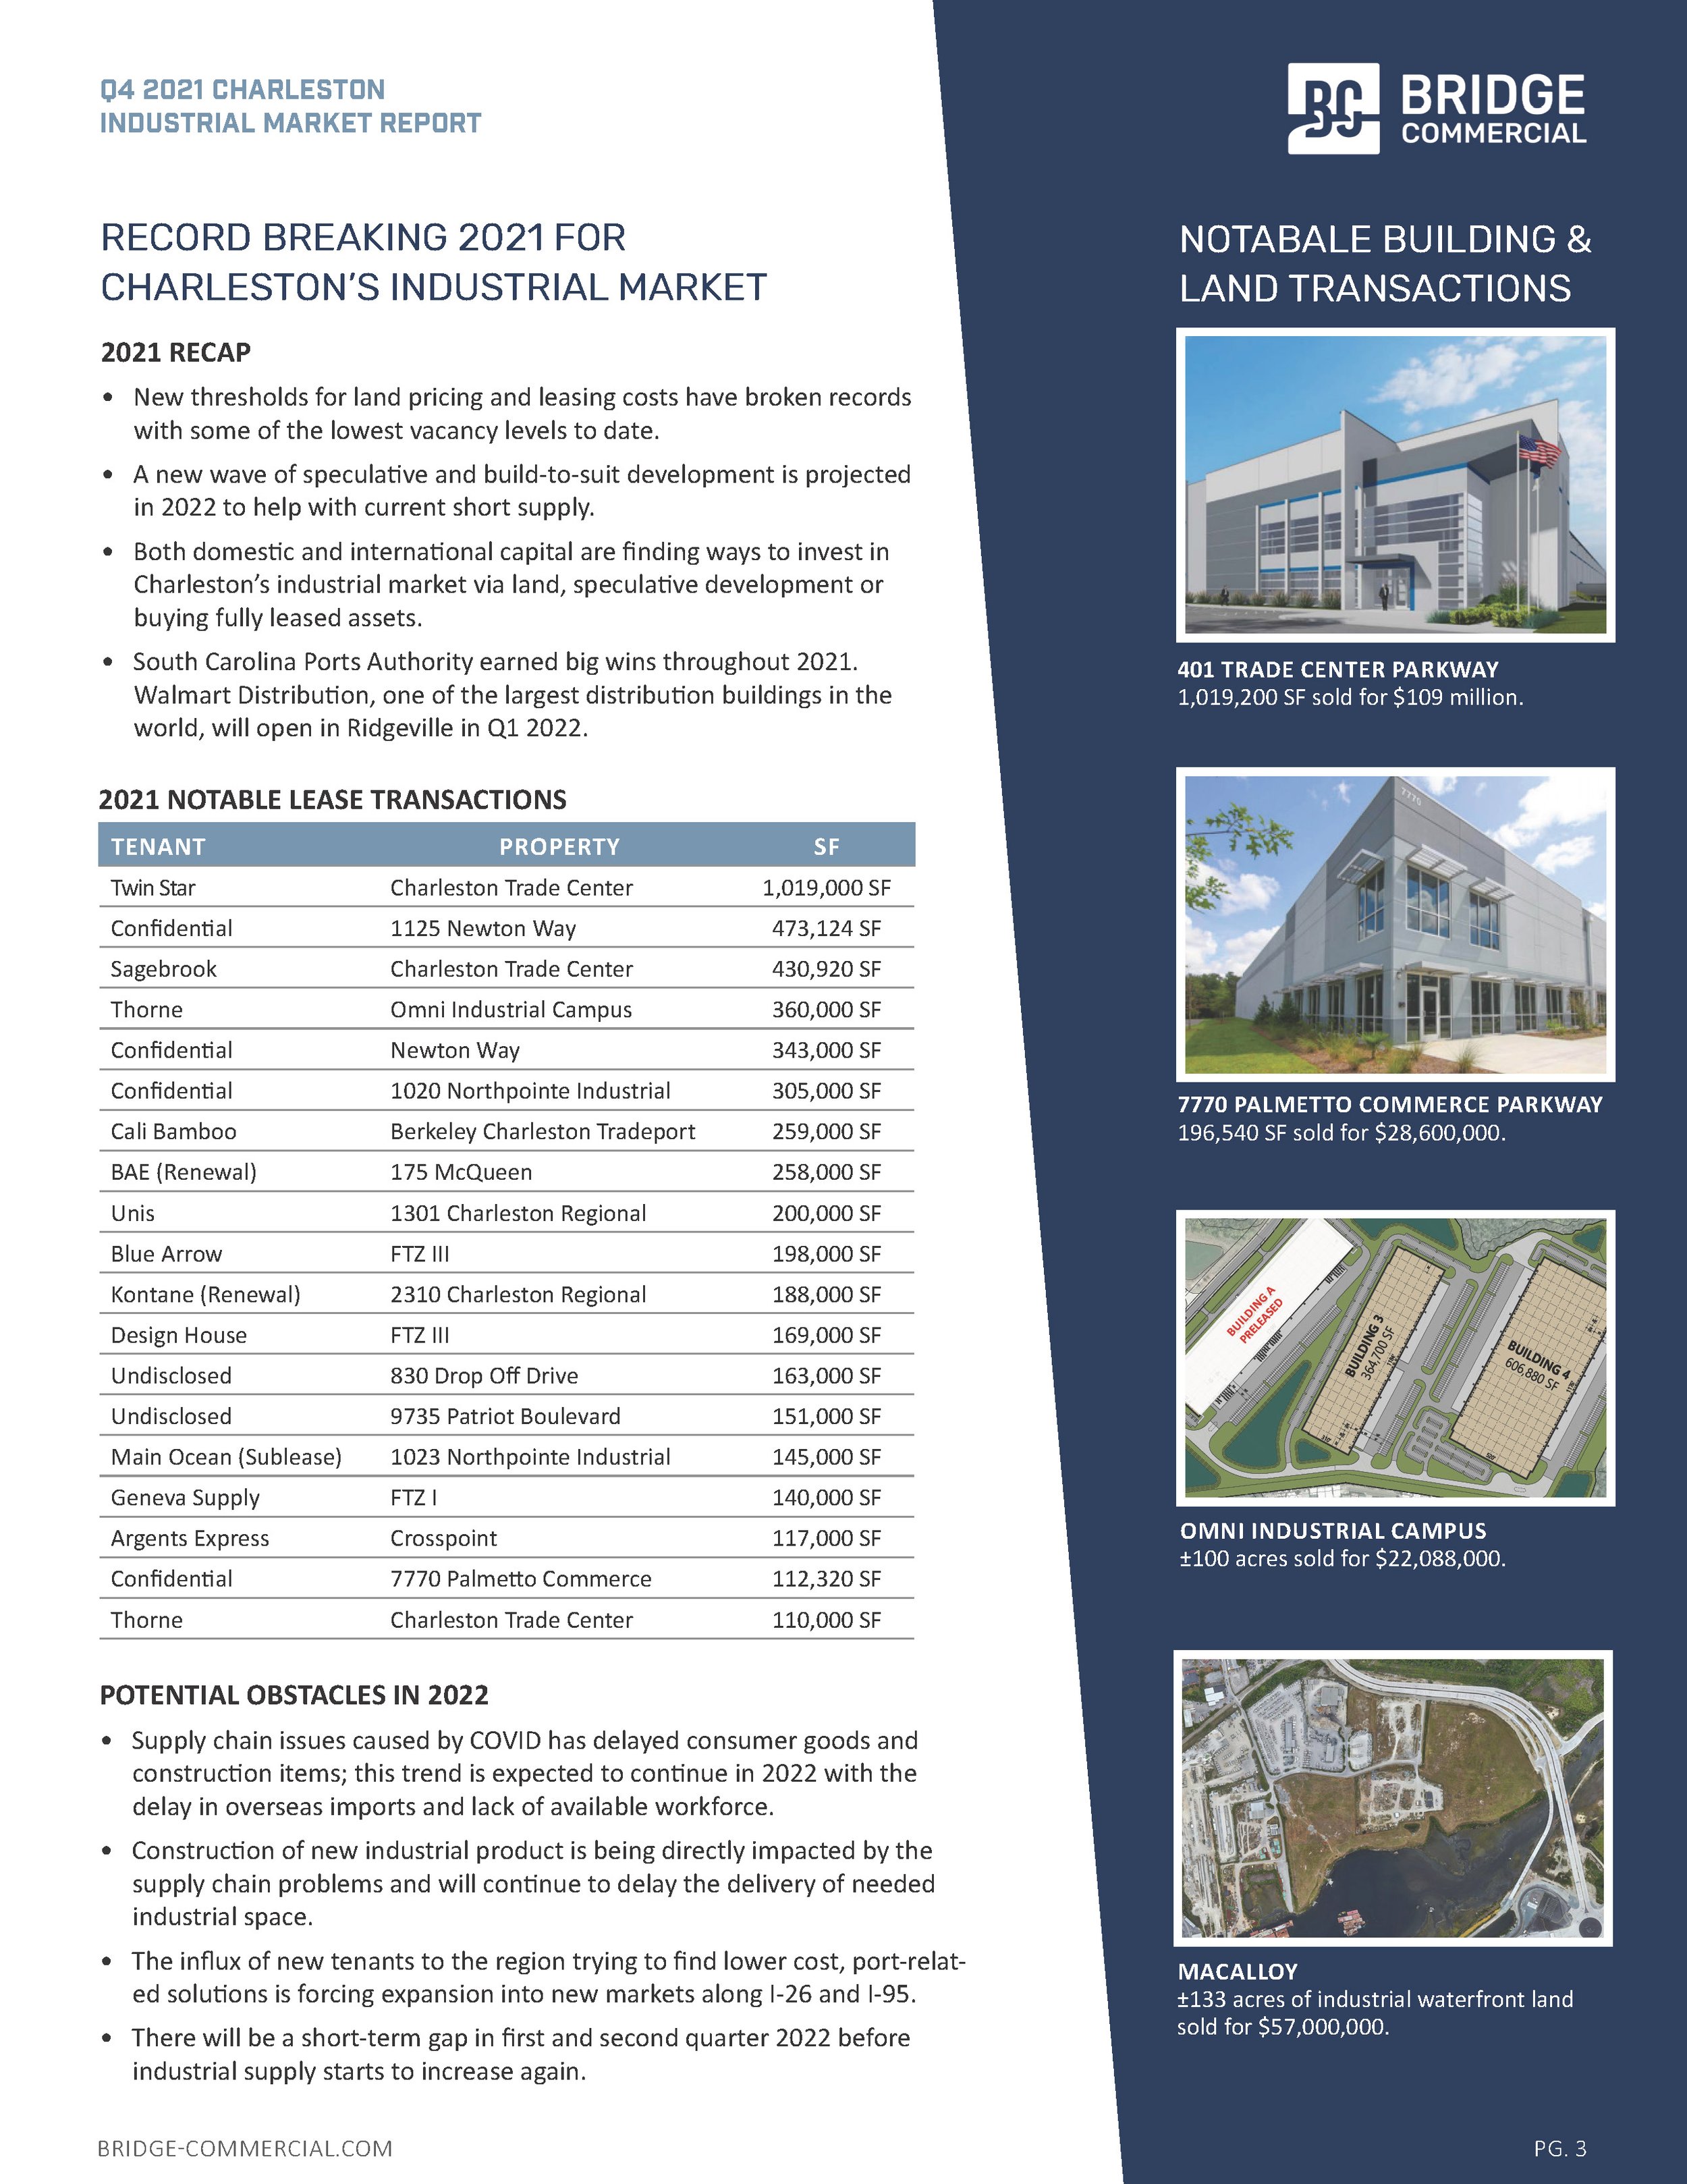 Q4 2021 Charleston Industrial Market Report_Bridge Commercial_Page_3.jpg